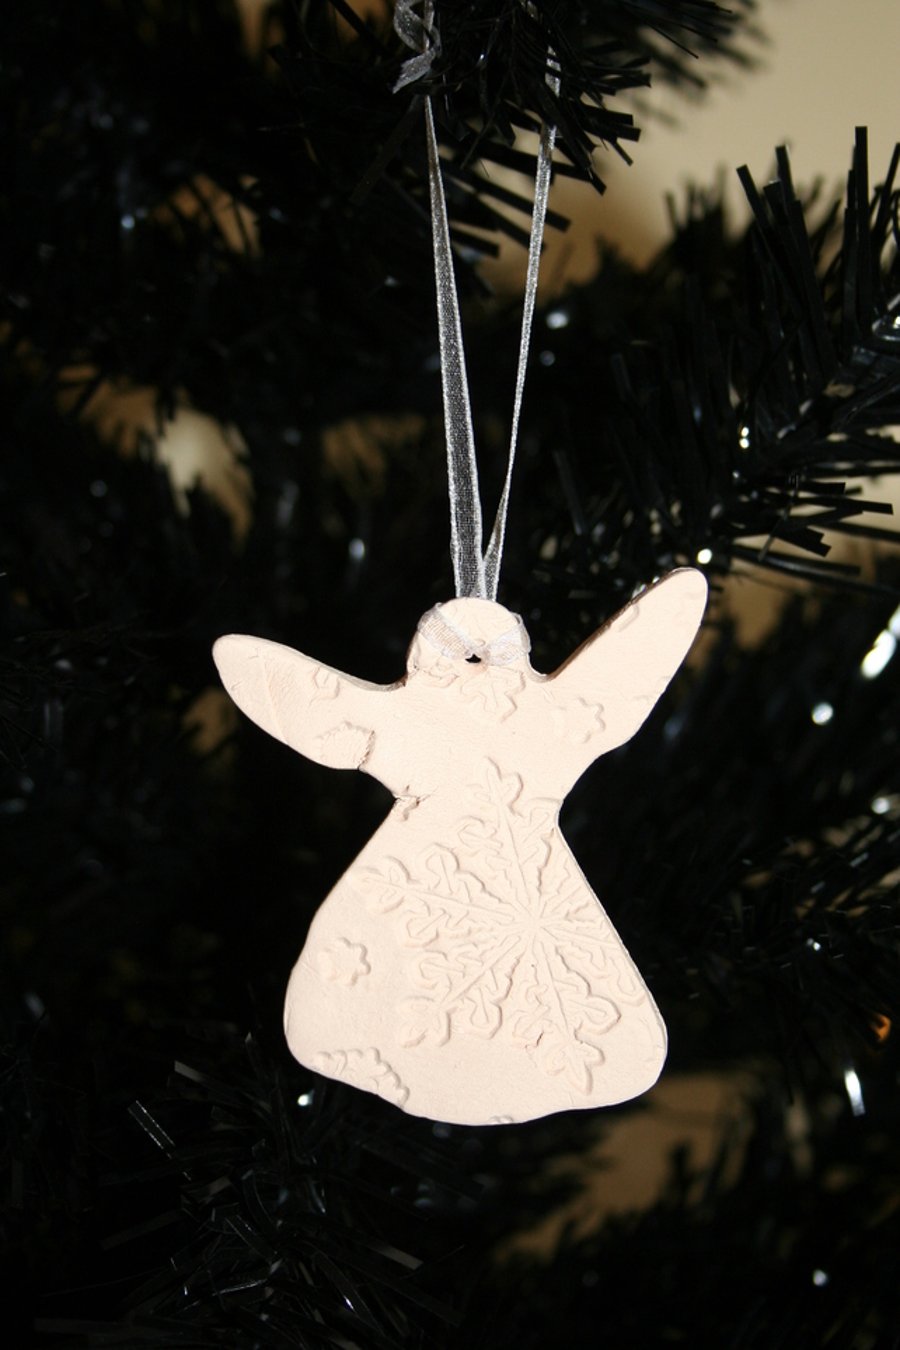 Handmade Ceramic angel embossed with snowflake design hanging decoration